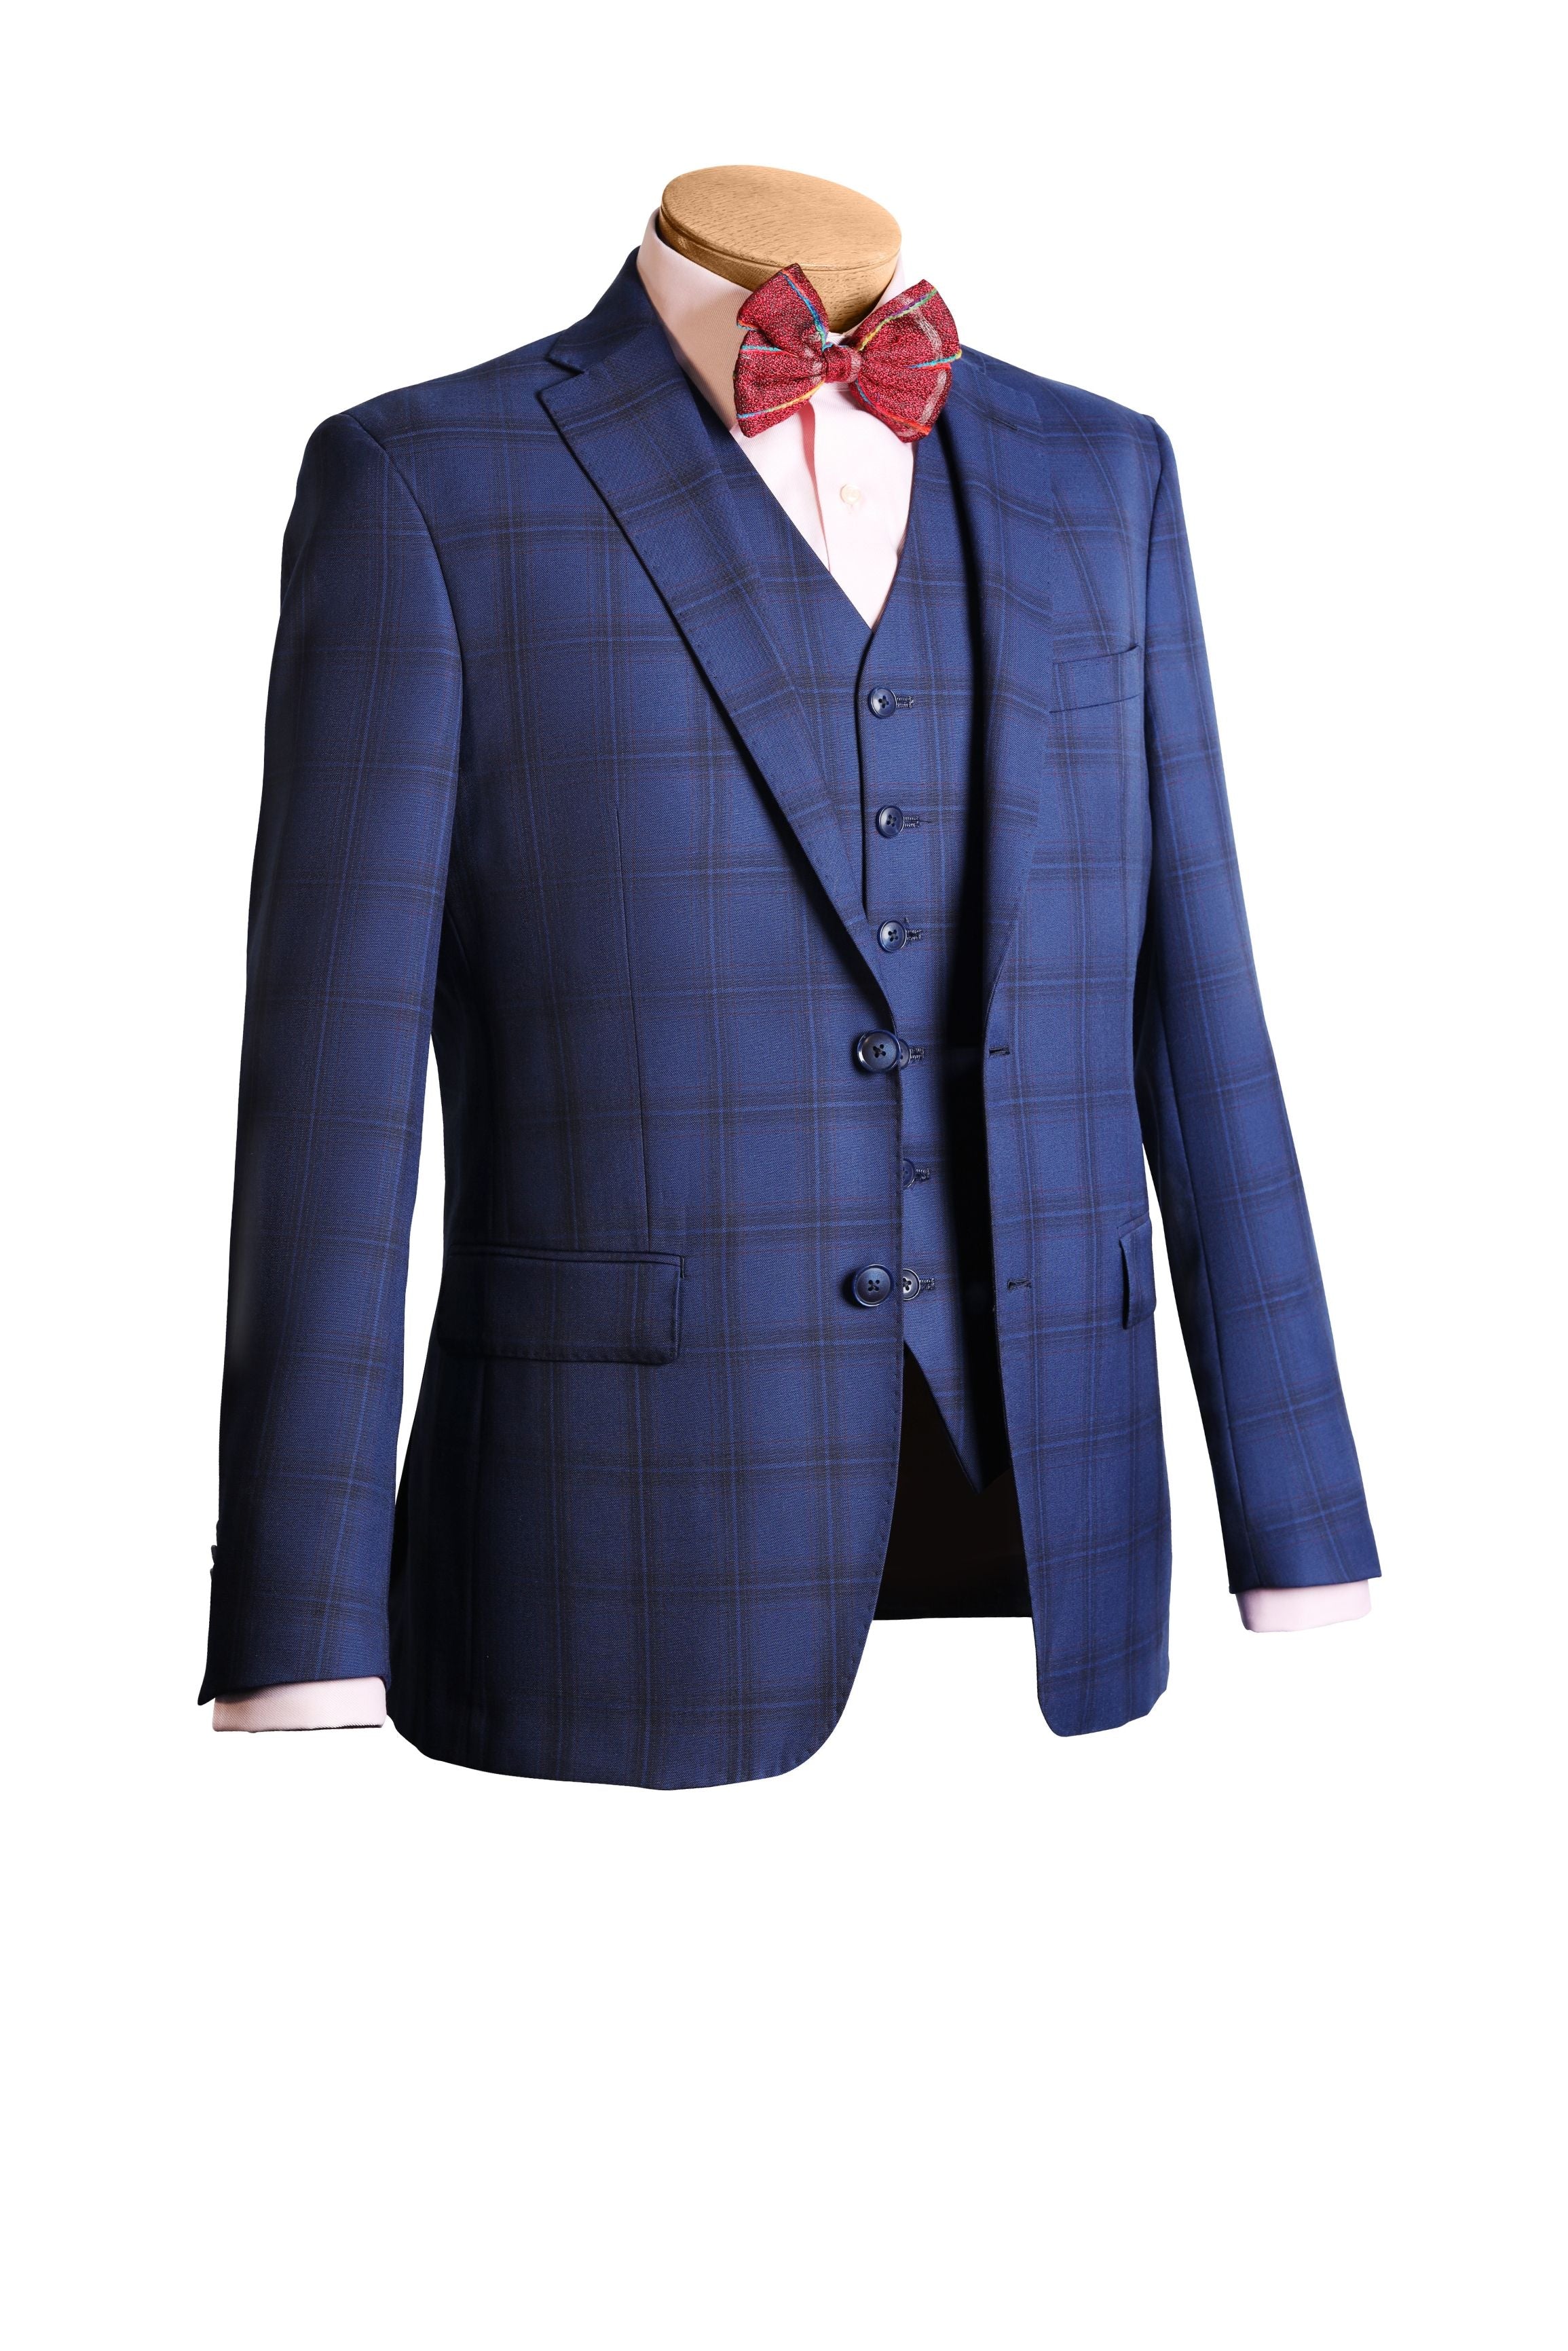 Lazarou Blue Navy 3 Piece Suit - Mastroianni Fashions